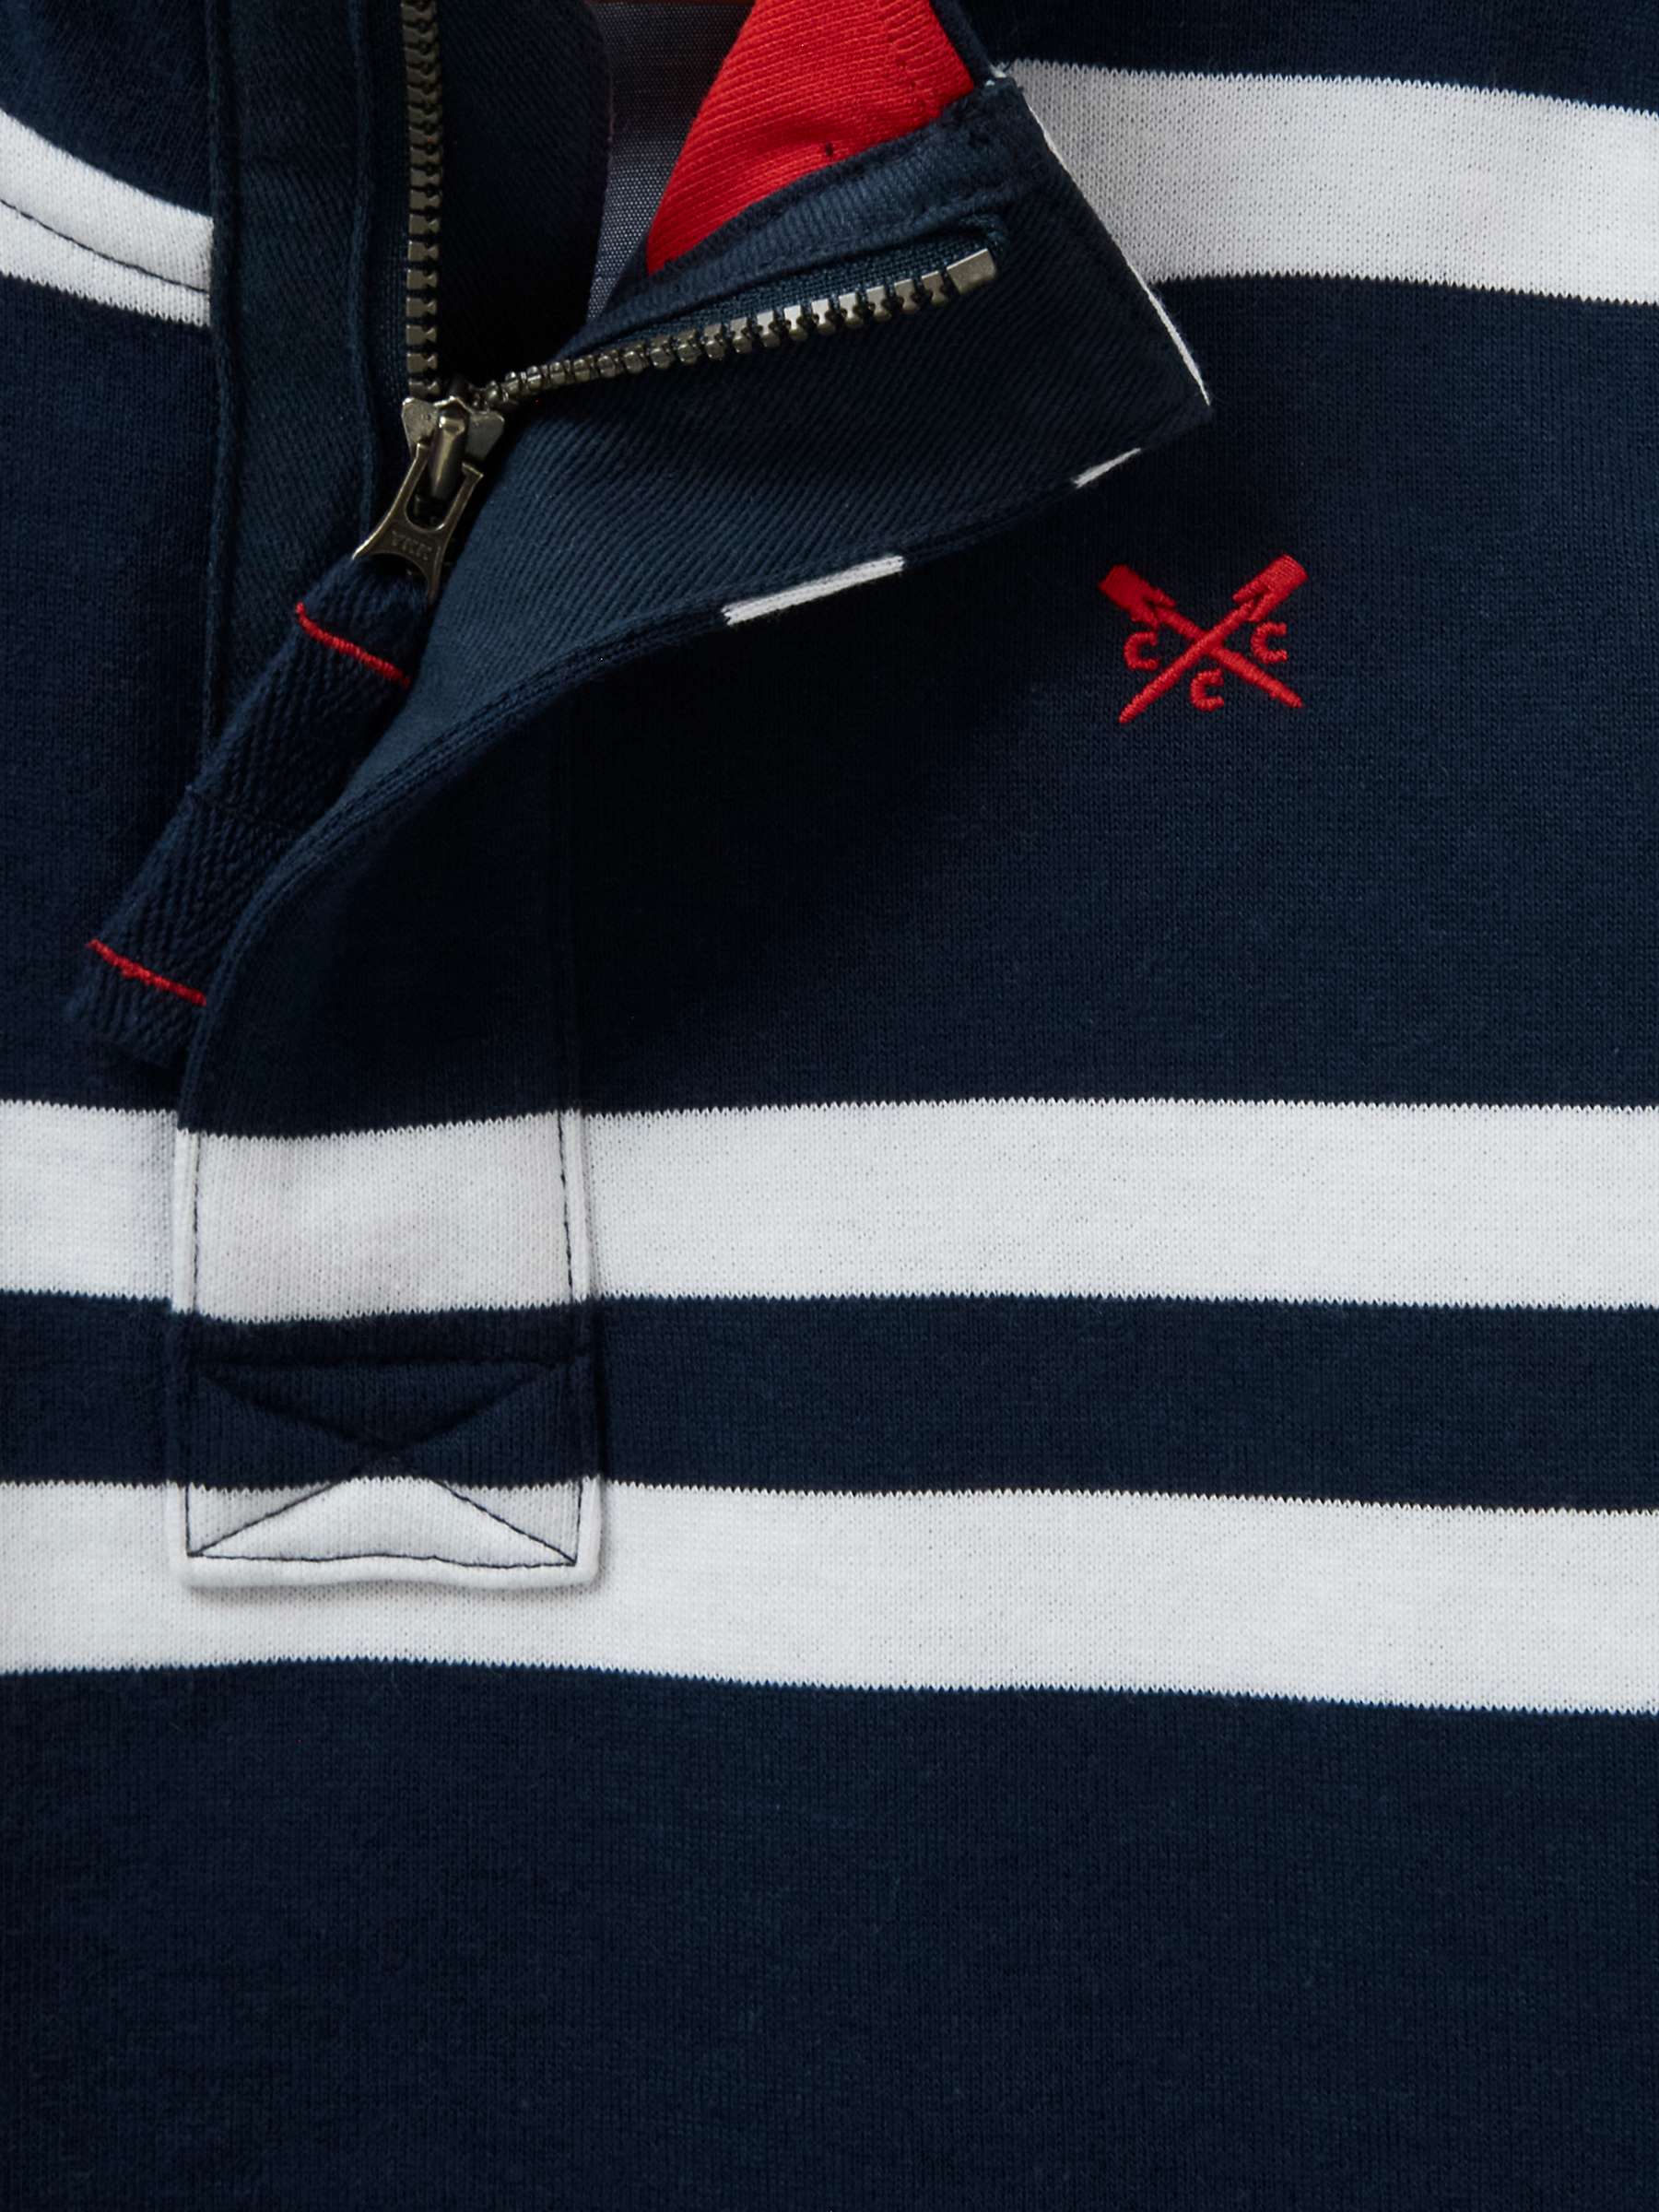 Buy Crew Clothing Kids' Half Zip Stripe Sweatshirt, Navy Blue Online at johnlewis.com